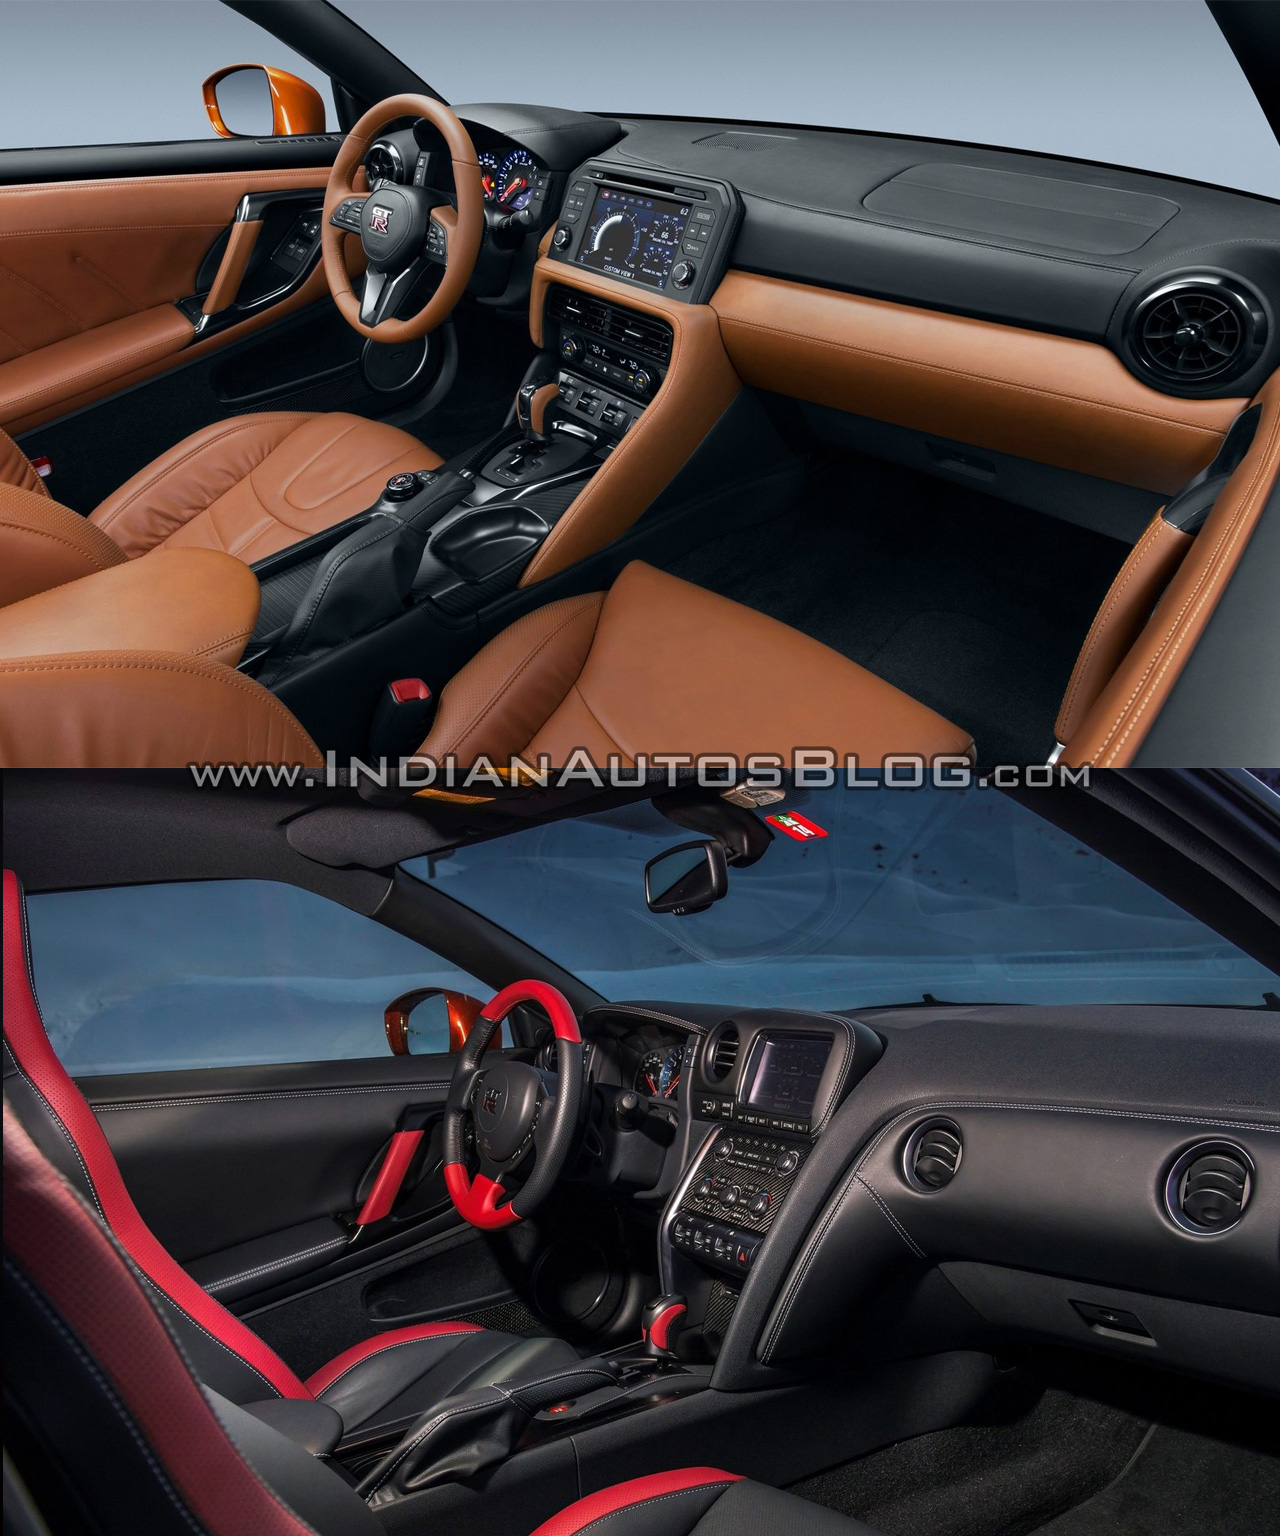 2016 Nissan GTR 61 Interior Photos  US News